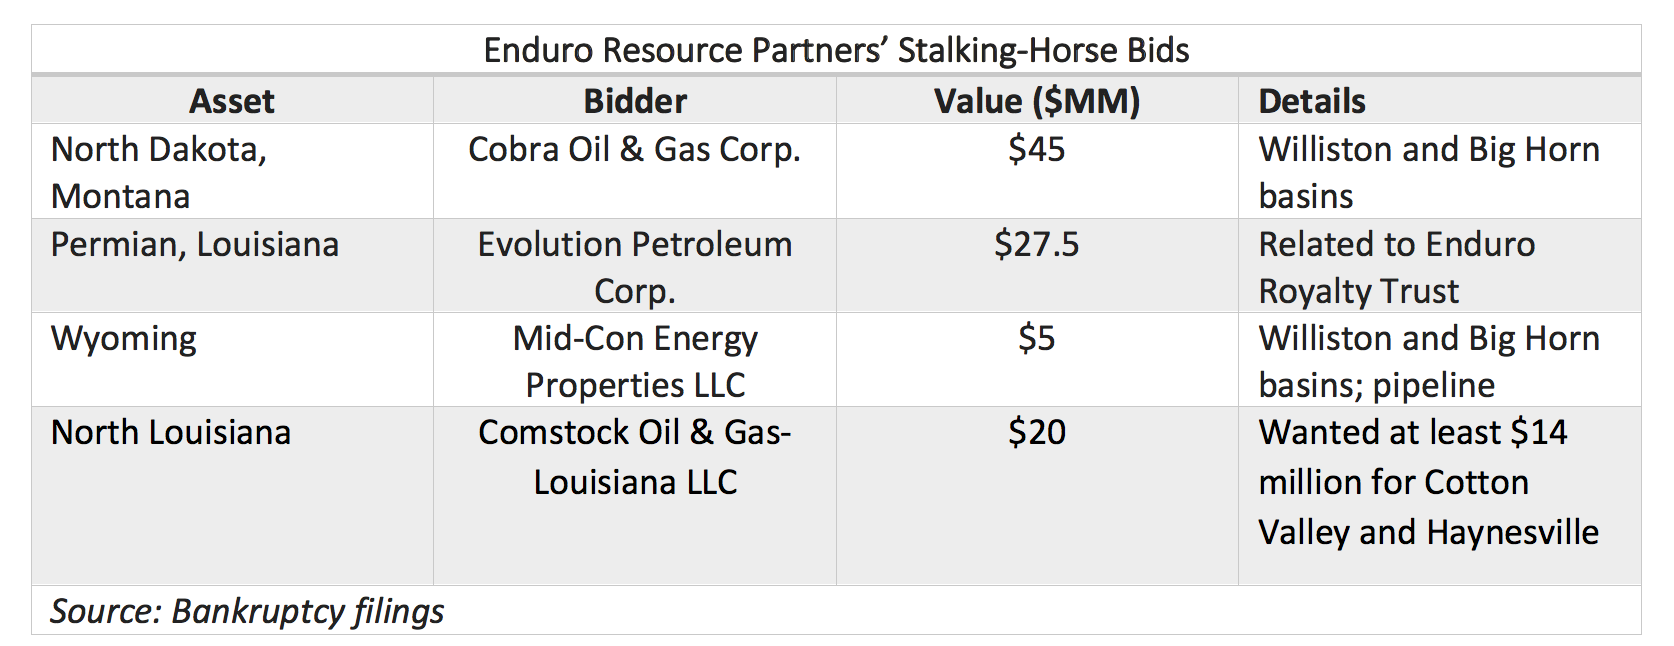 Enduro Resource Partners’ Stalking-Horse Bids (Source: Bankruptcy filings)